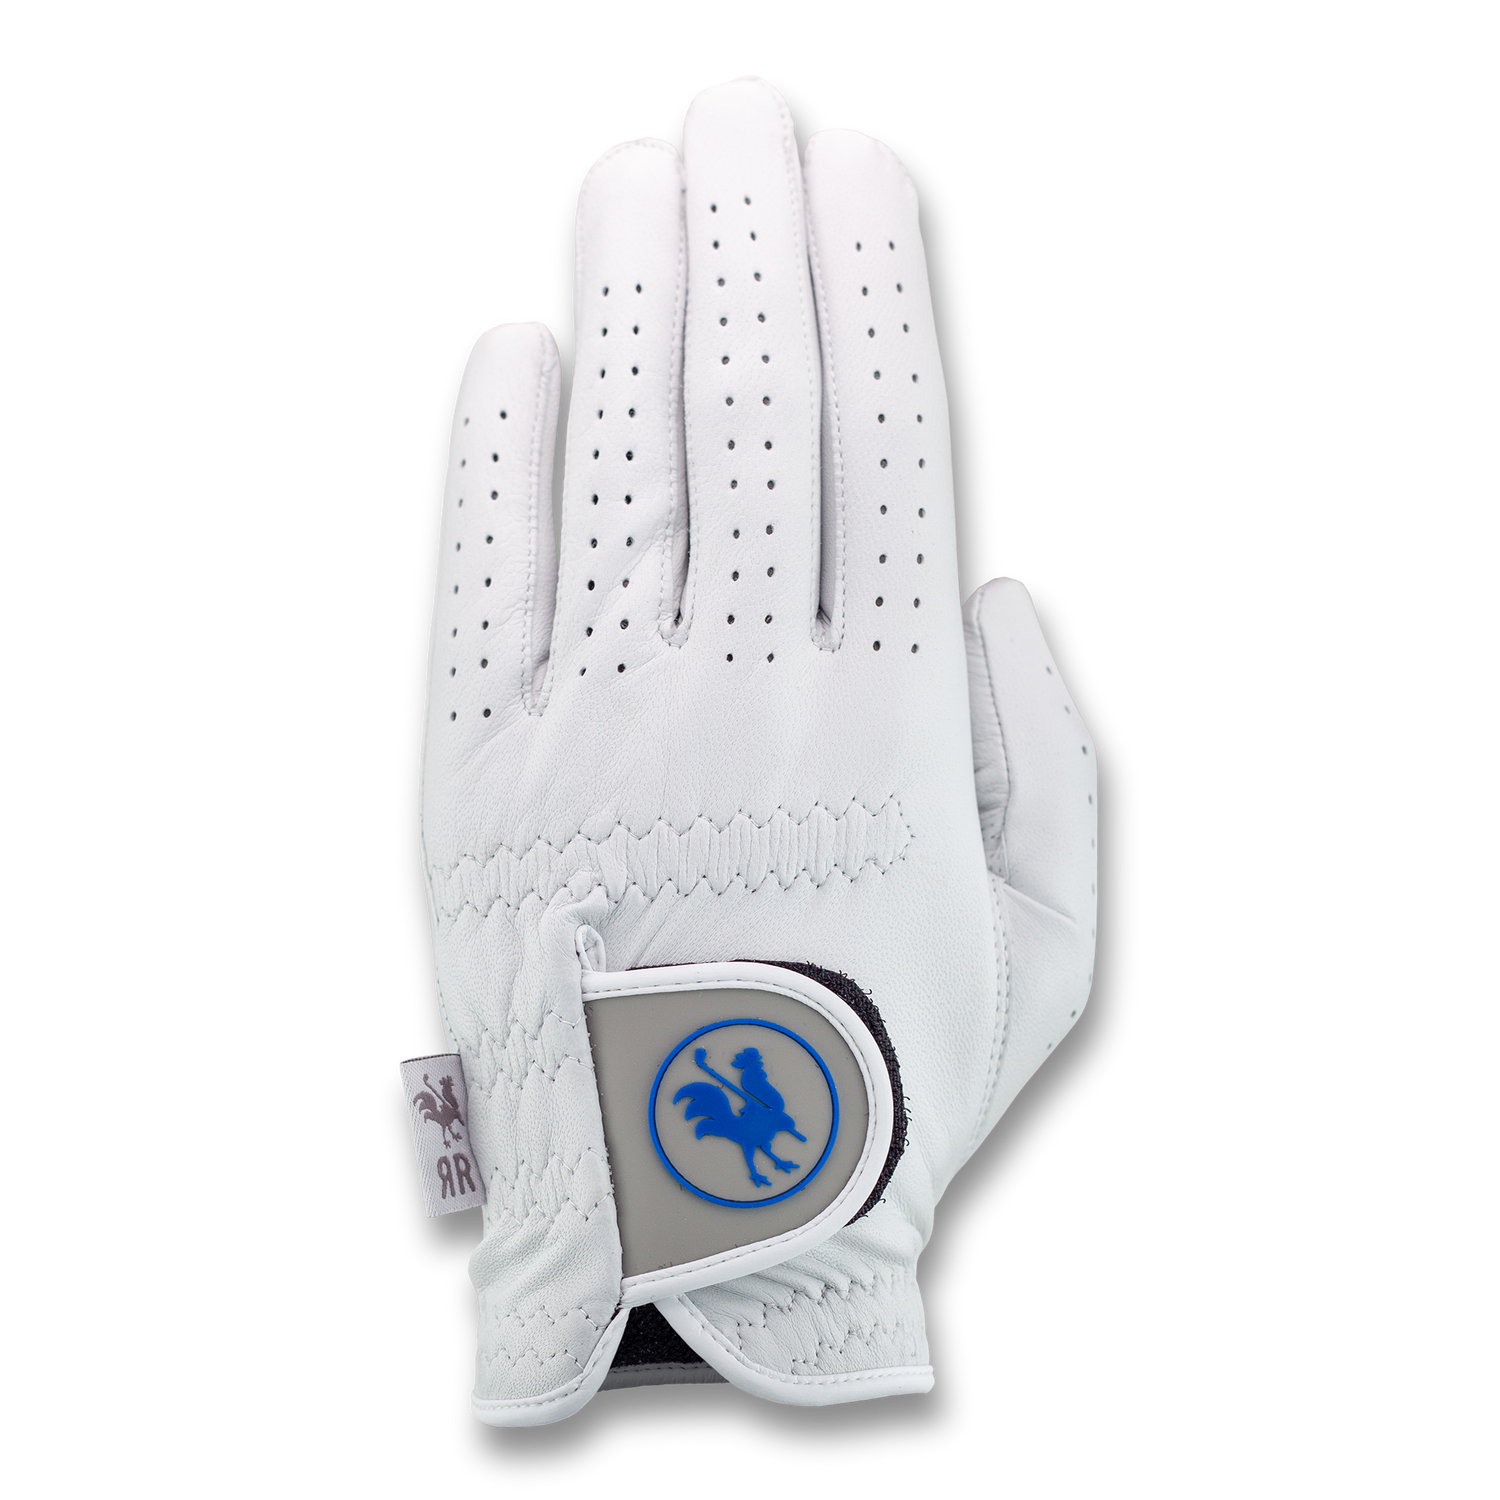 The Over Easy left hand golf glove